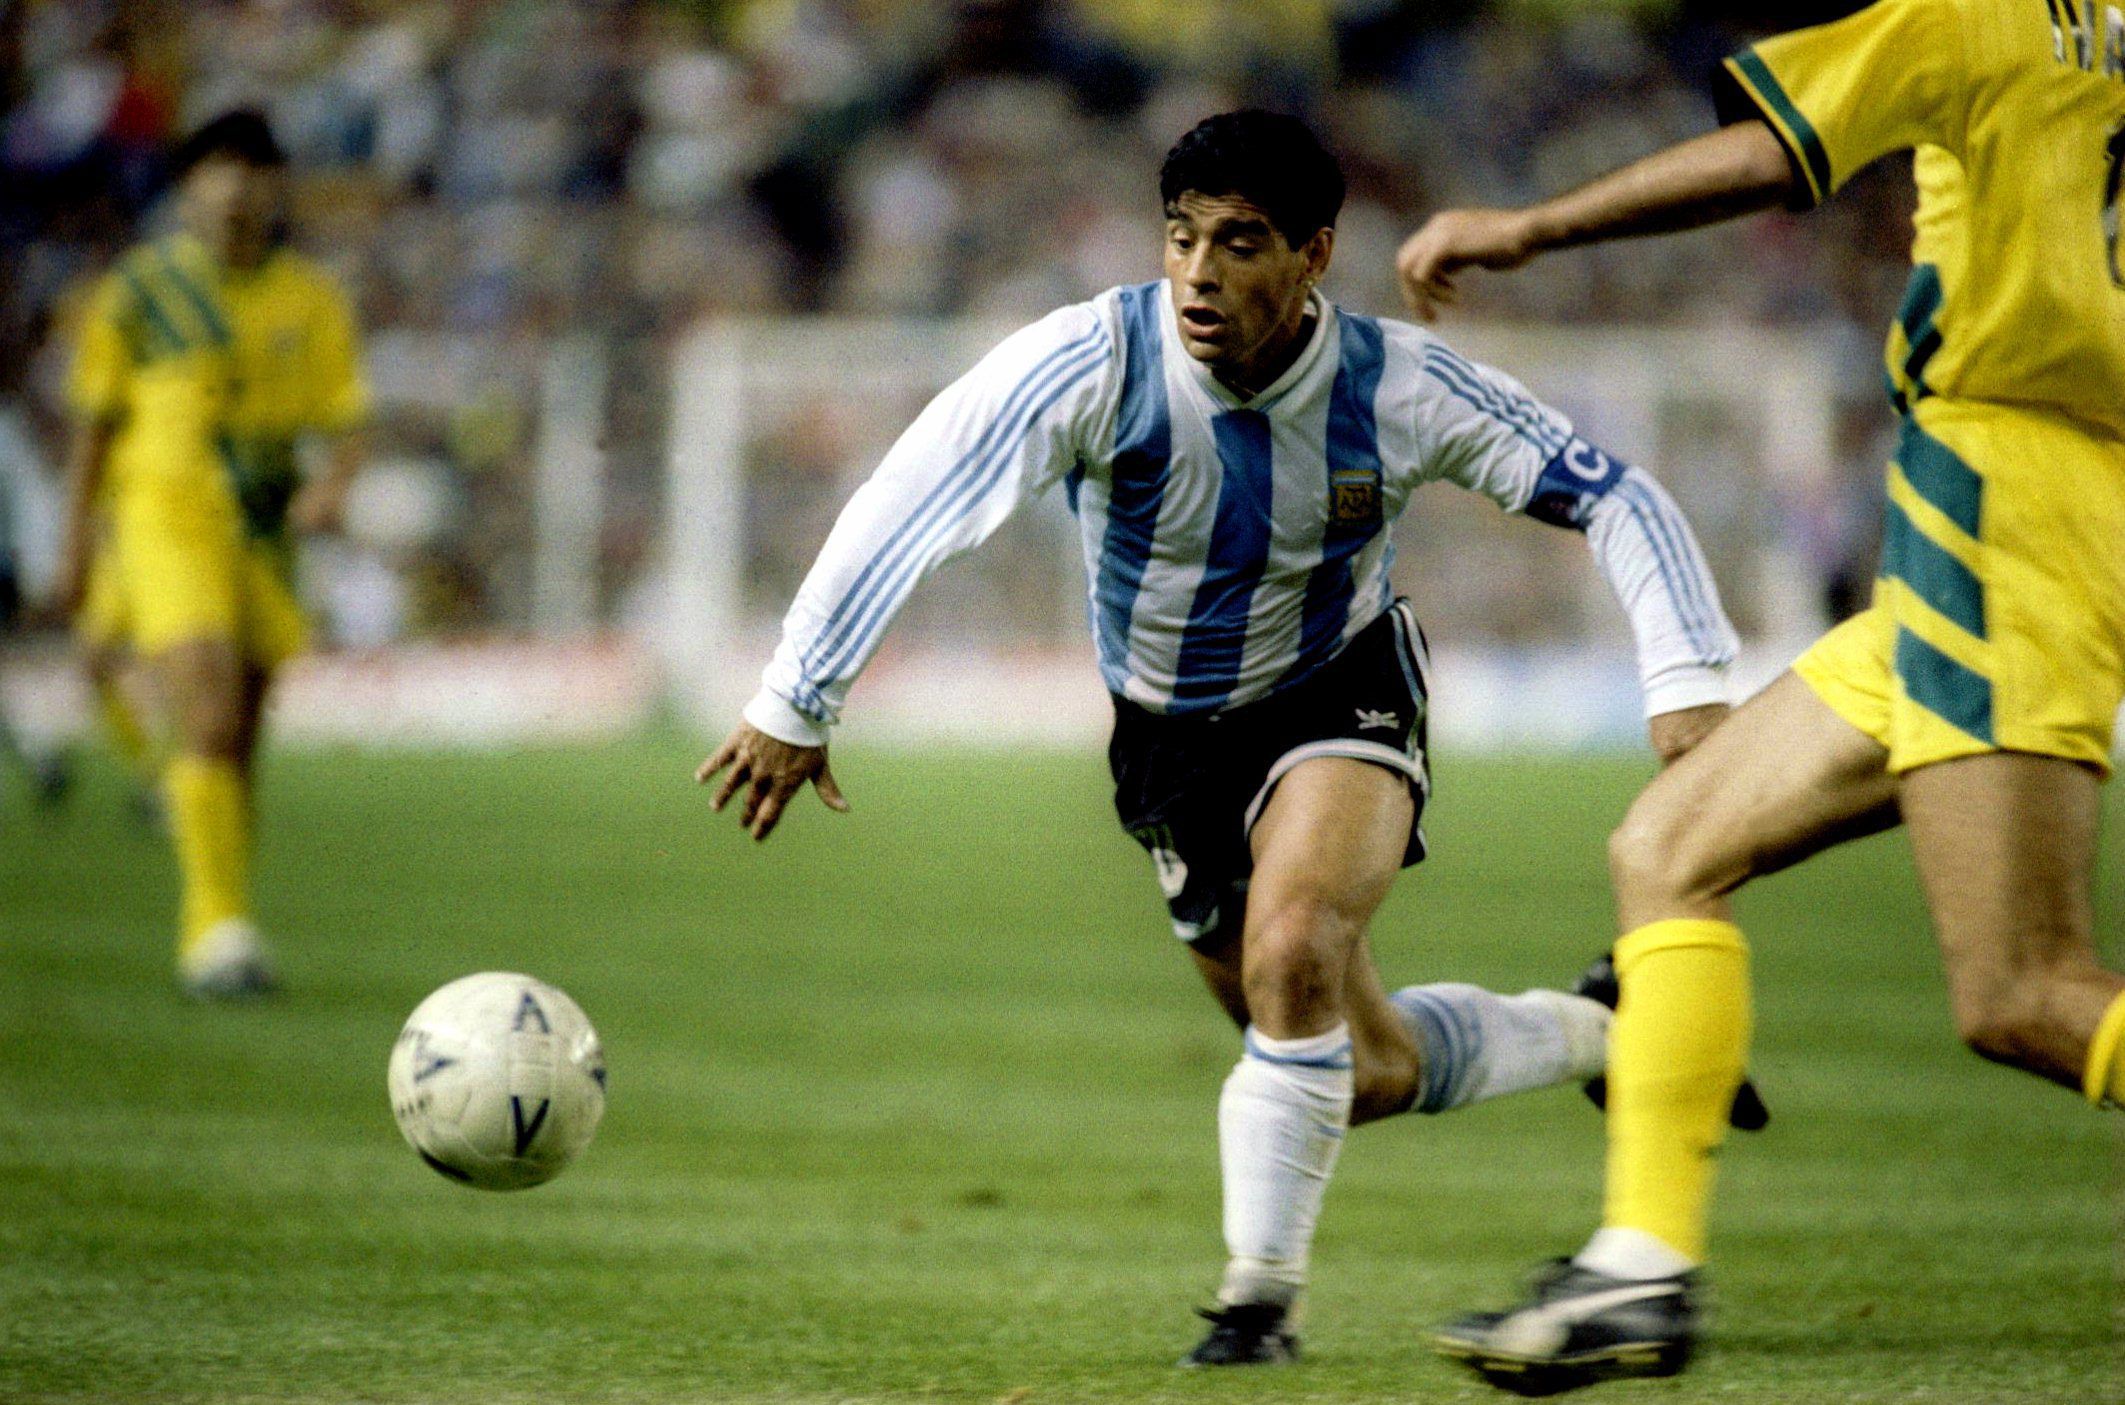 Diego Maradona playing for Argentina